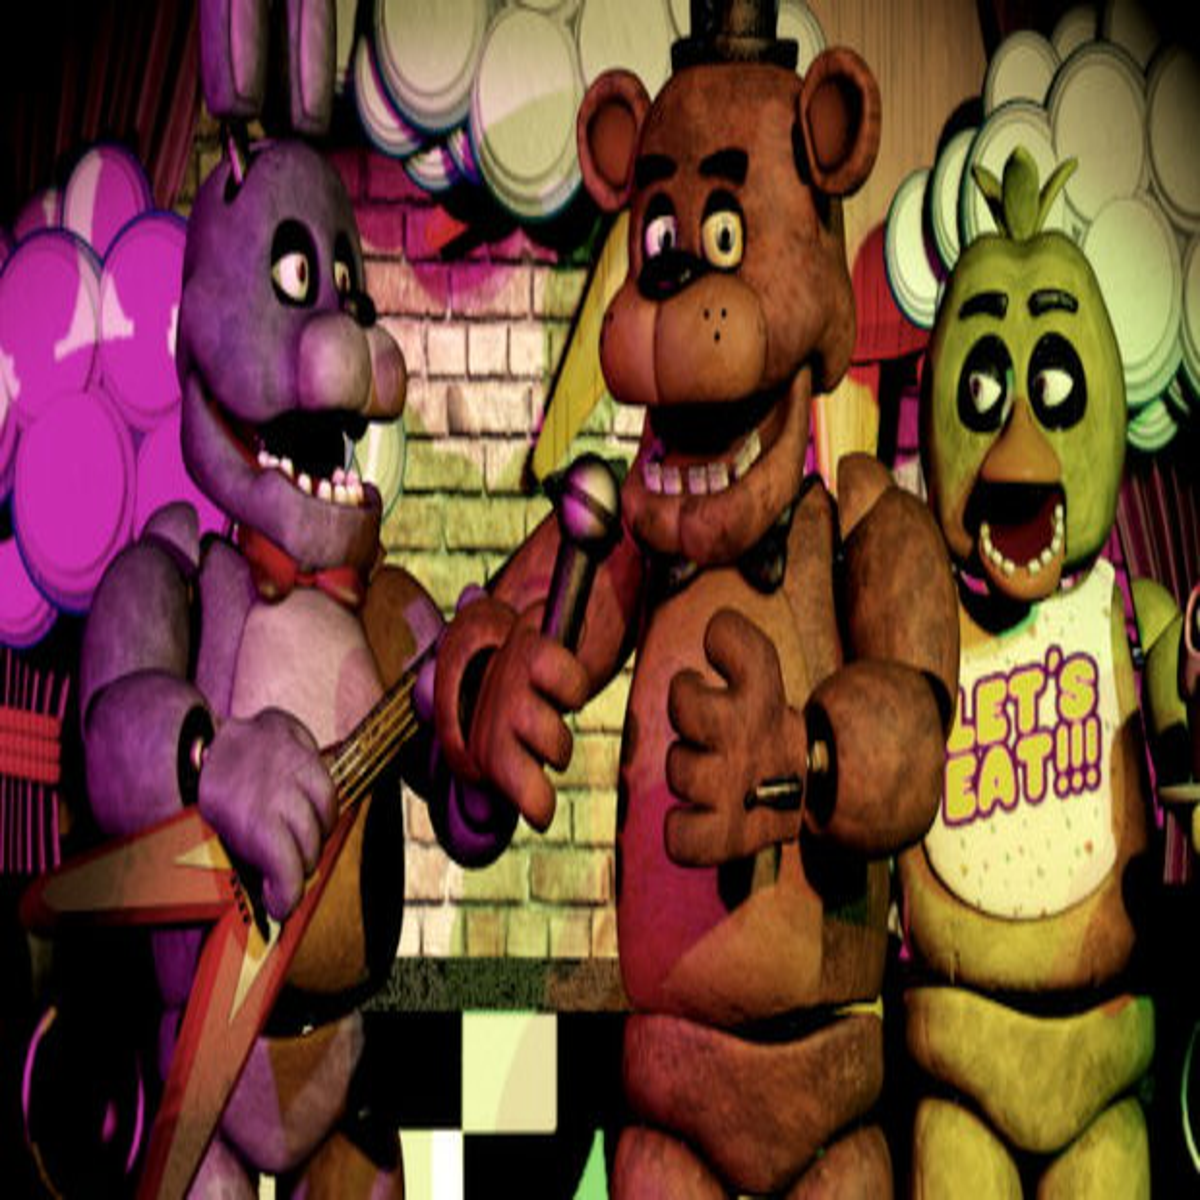 Freddy Fazbear's Pizzeria Simulator Five Nights At Freddy's 3 Fan Art  Animatronics PNG - Free Download